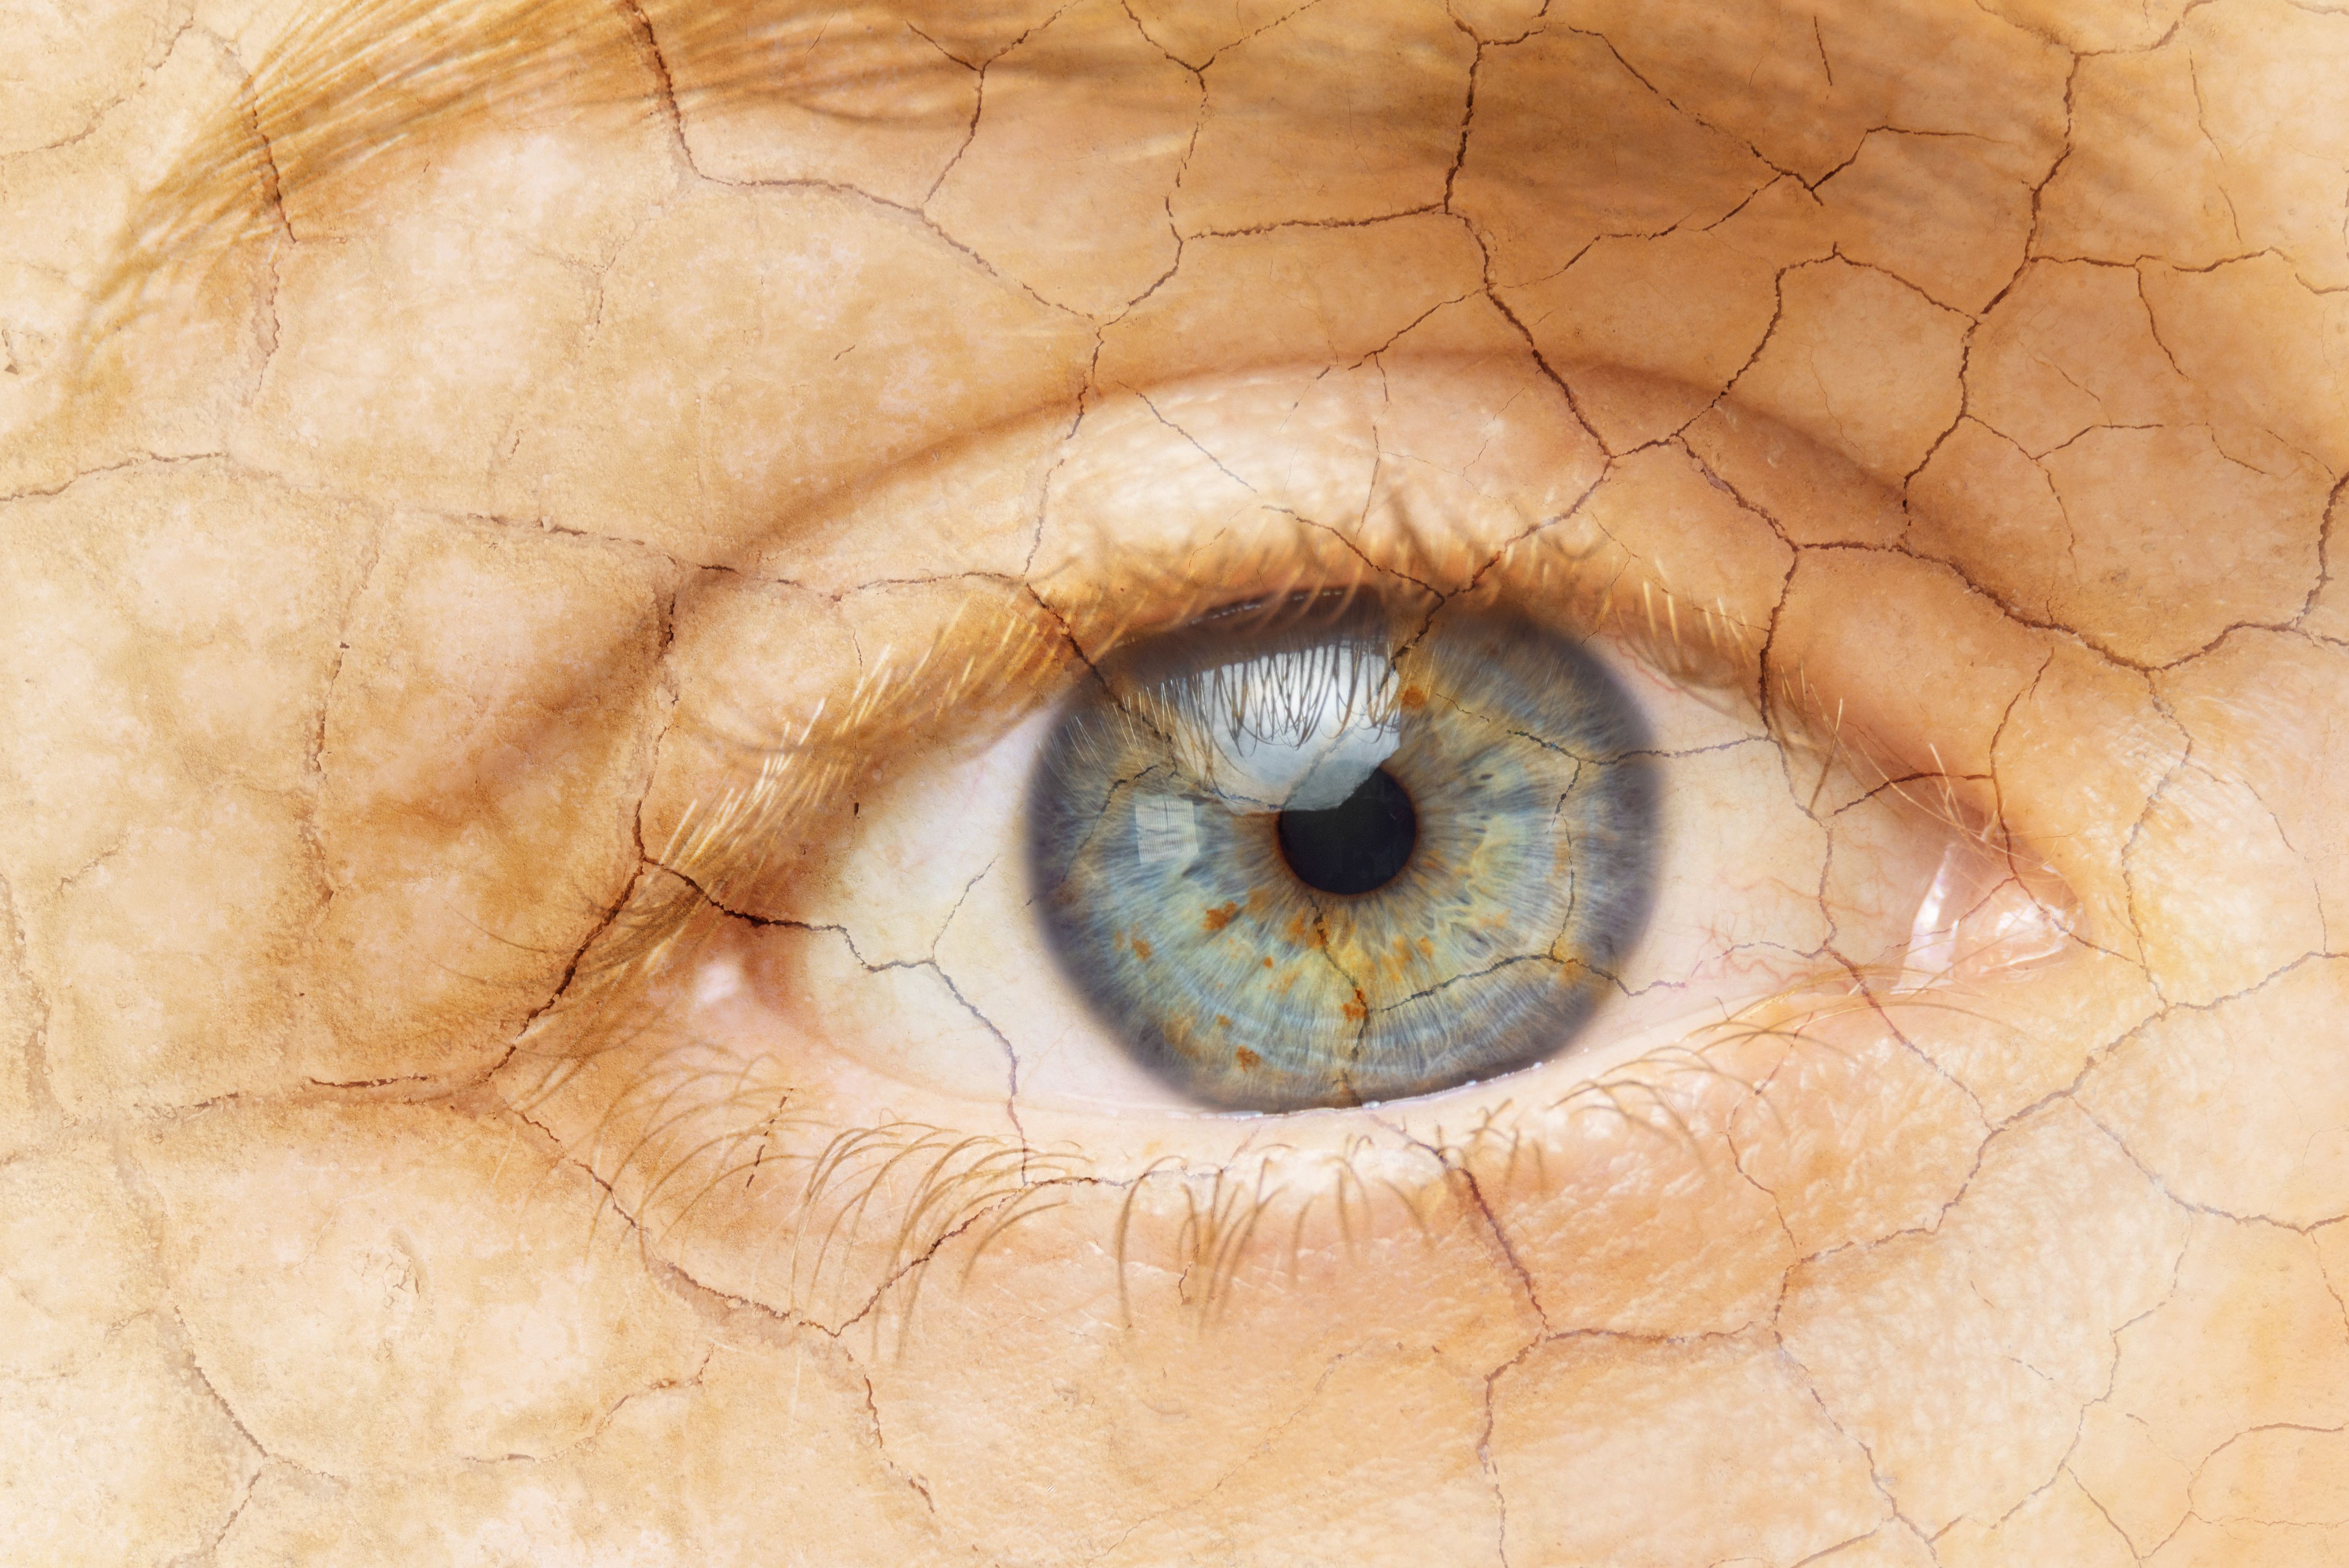 Study: Dry eye disease alters how the eye’s cornea heals itself after injury